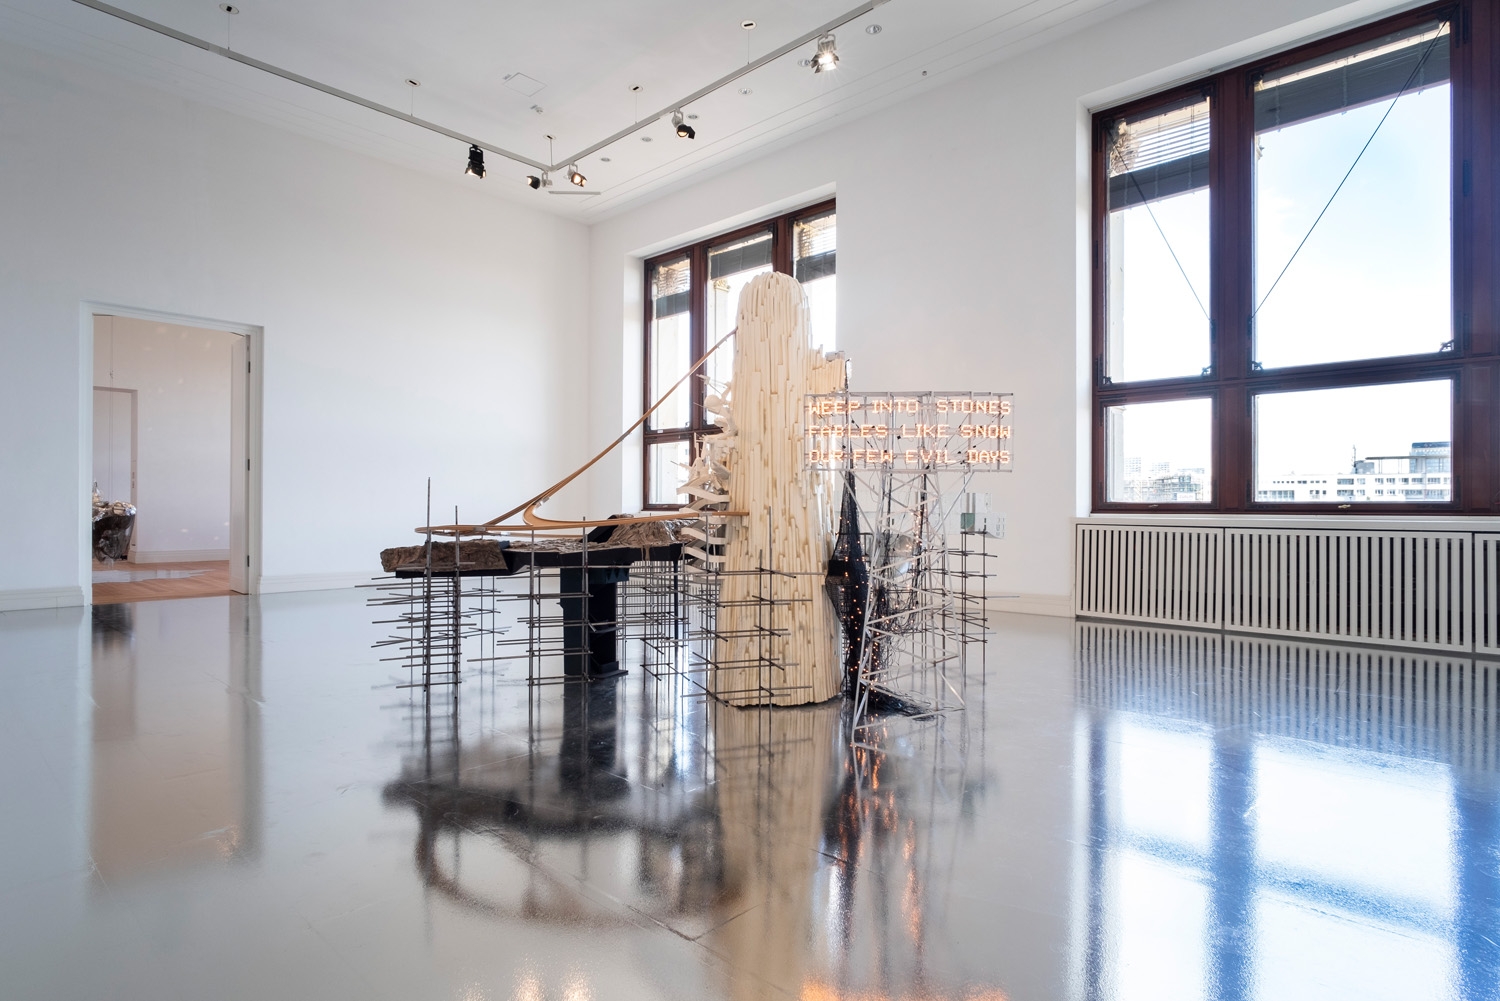 Lee Bul: Crash, Installation view, Martin-Gropius-Bao, Berlin